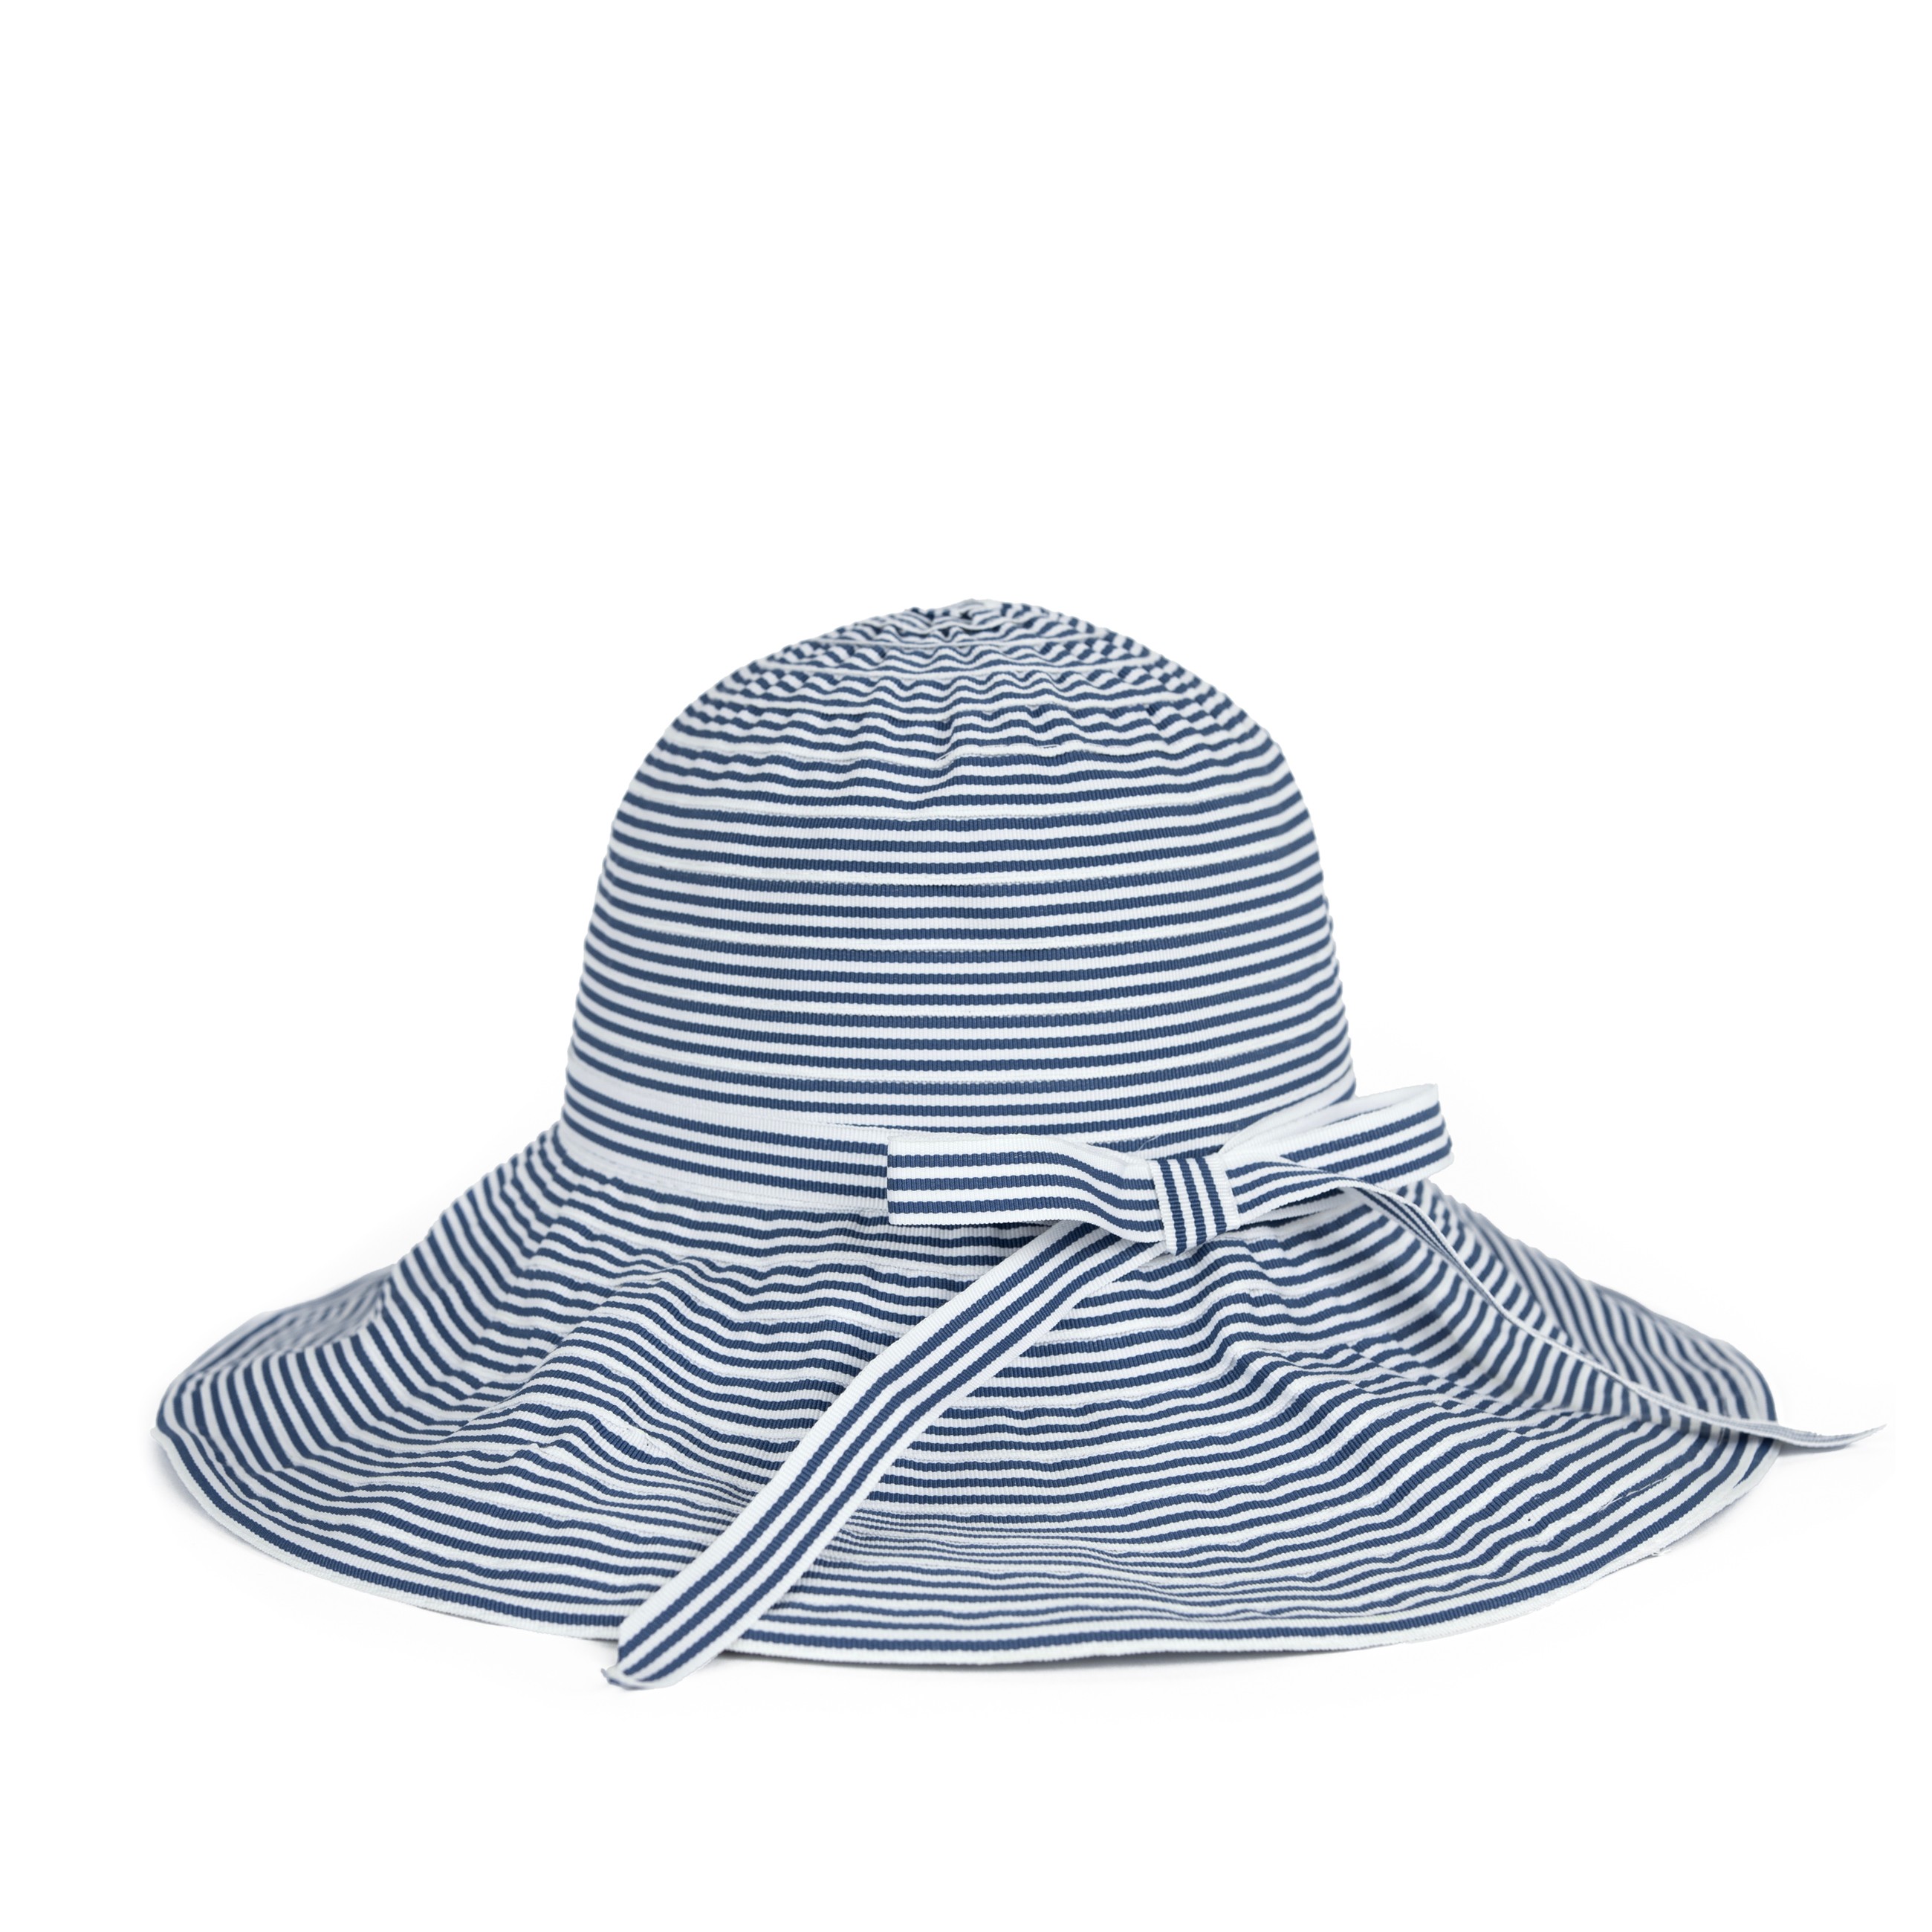 Art Of Polo Woman's Hat cz23161-1